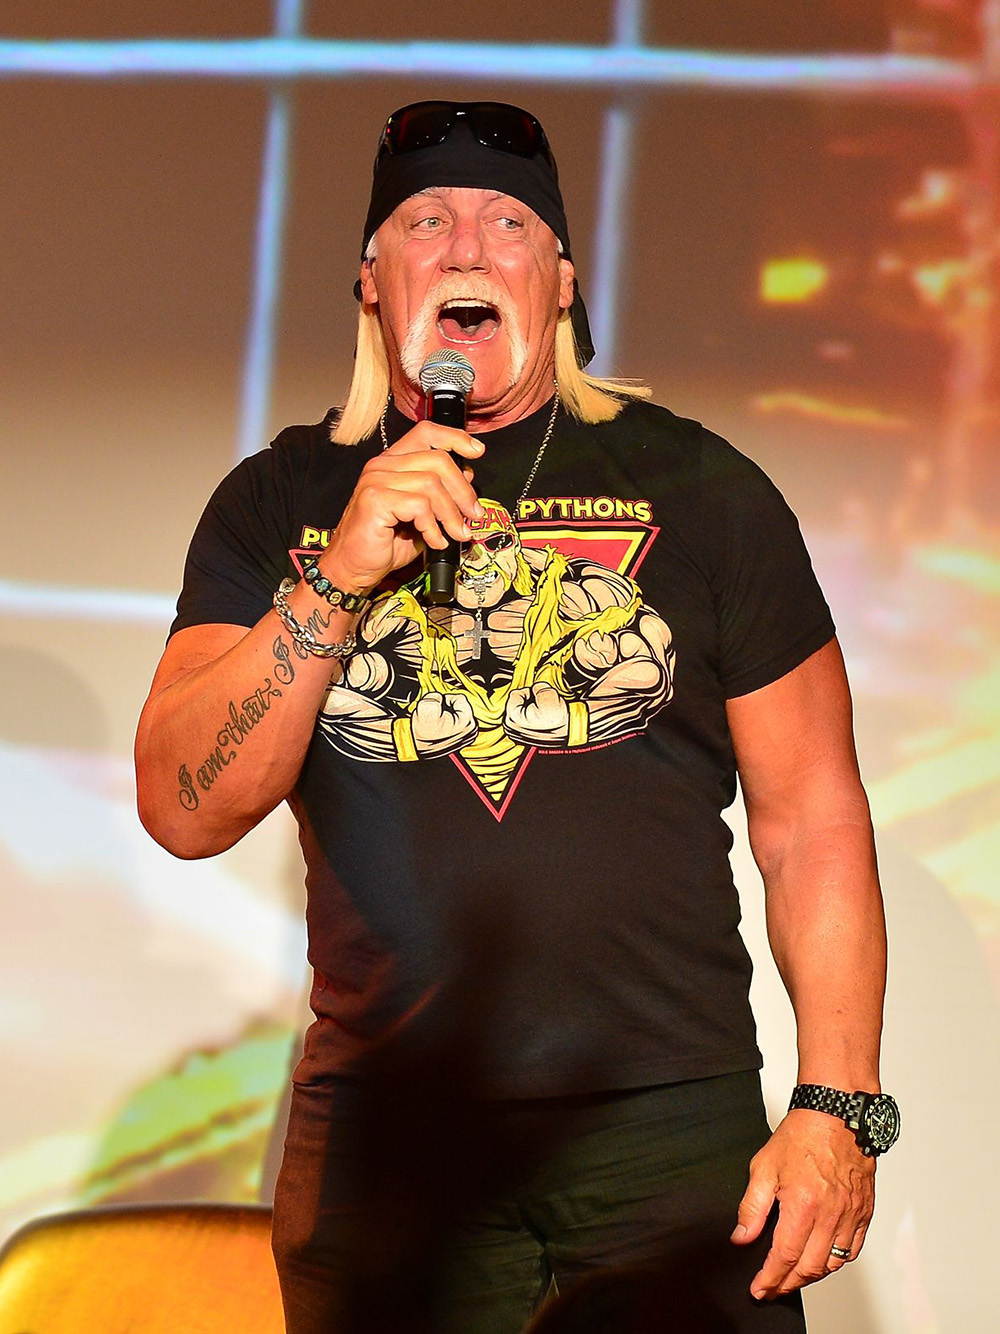 Hulk Hogan Photos Of The Wrestler picture photo